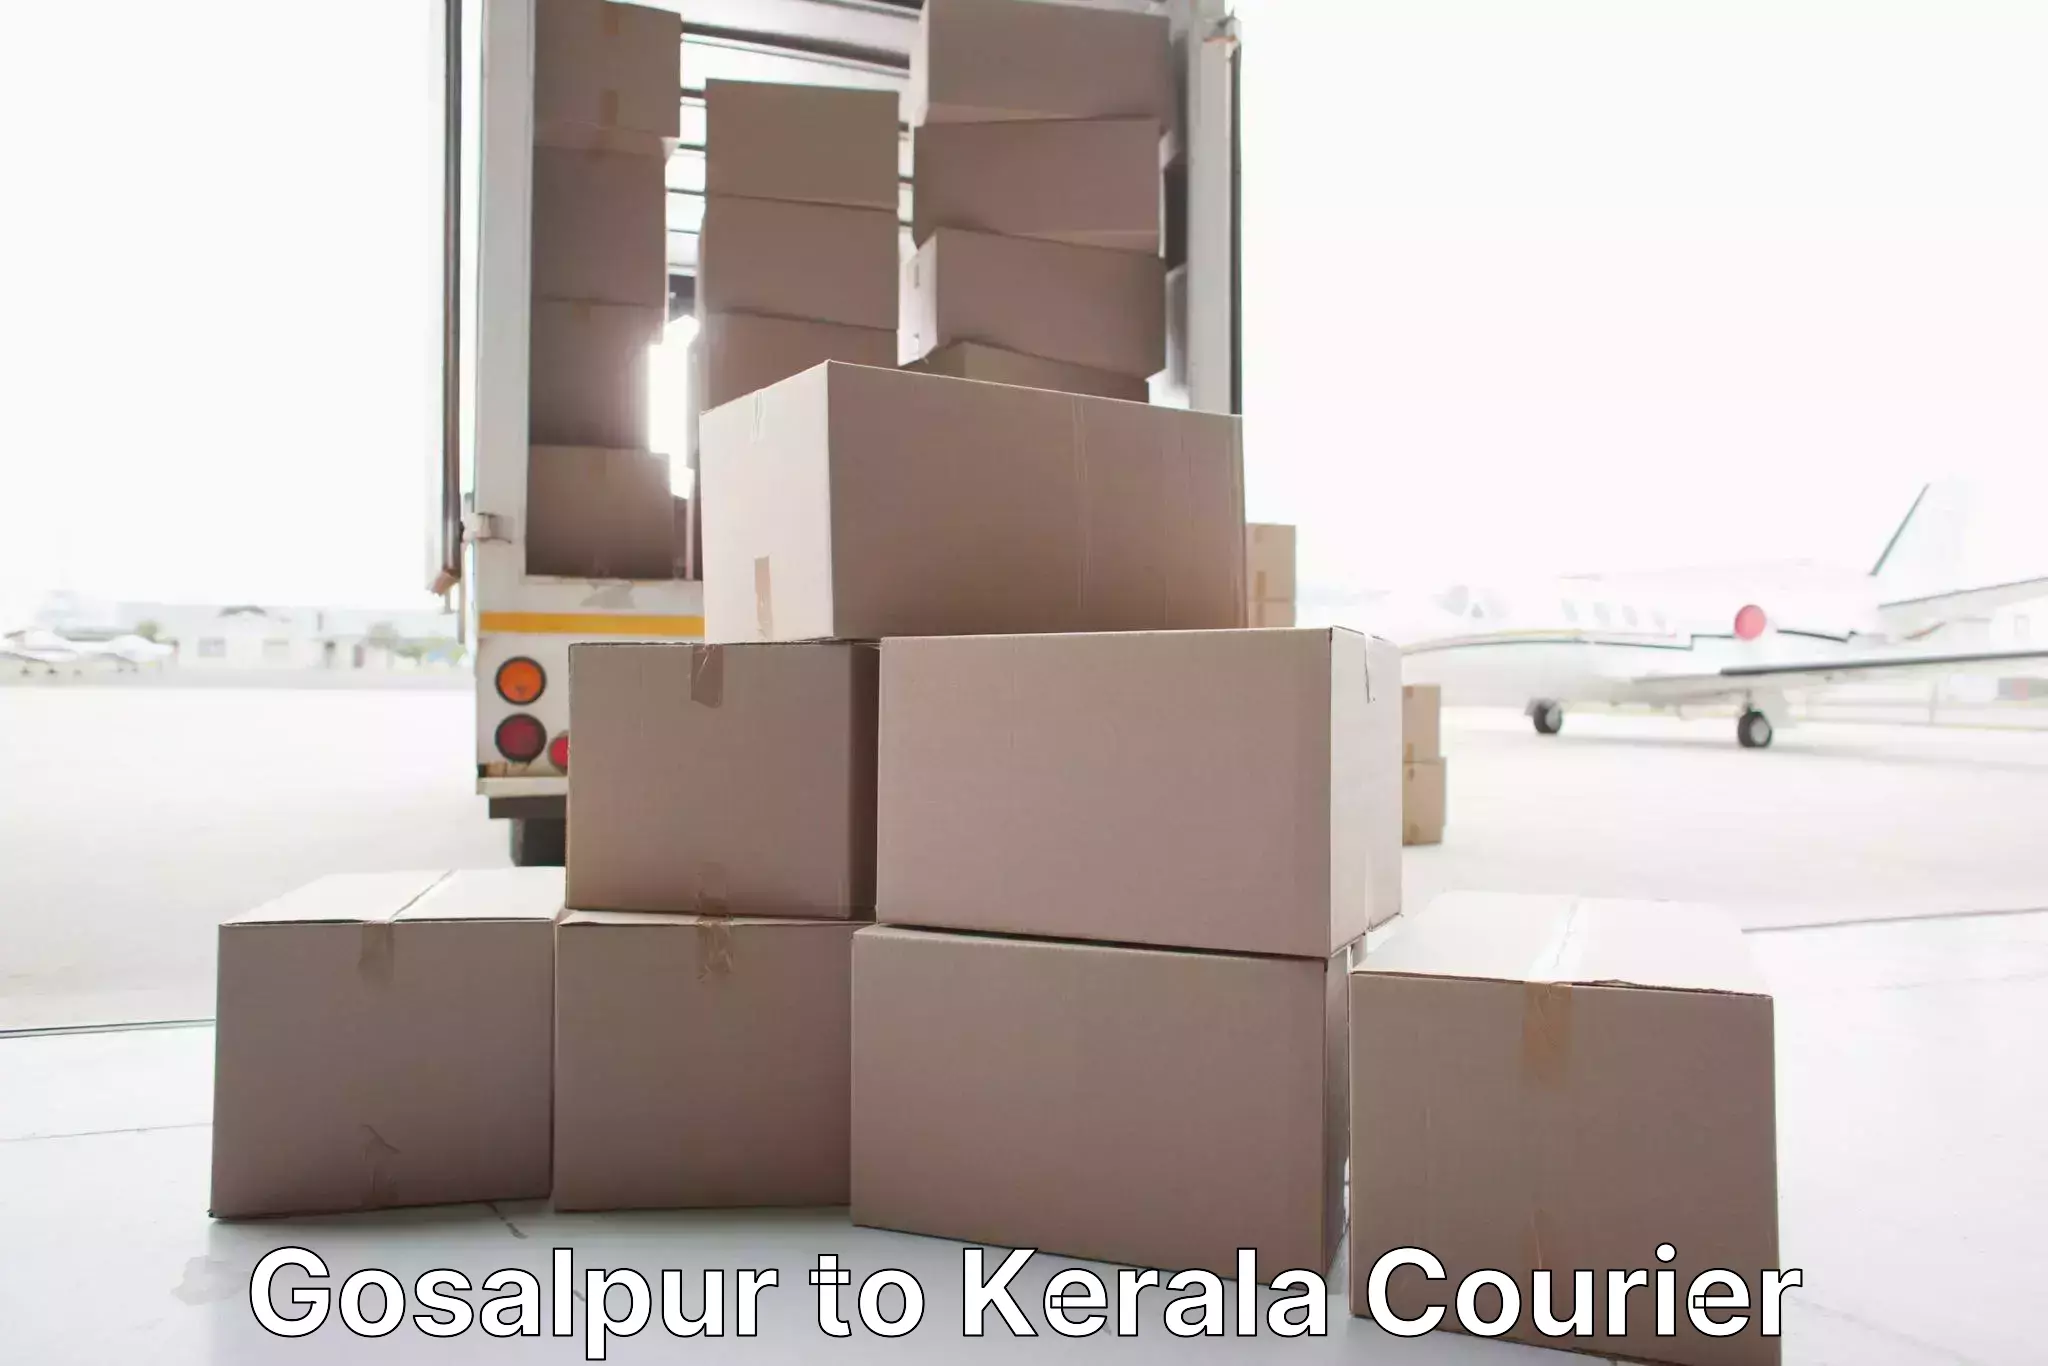 Budget-friendly movers Gosalpur to Aluva